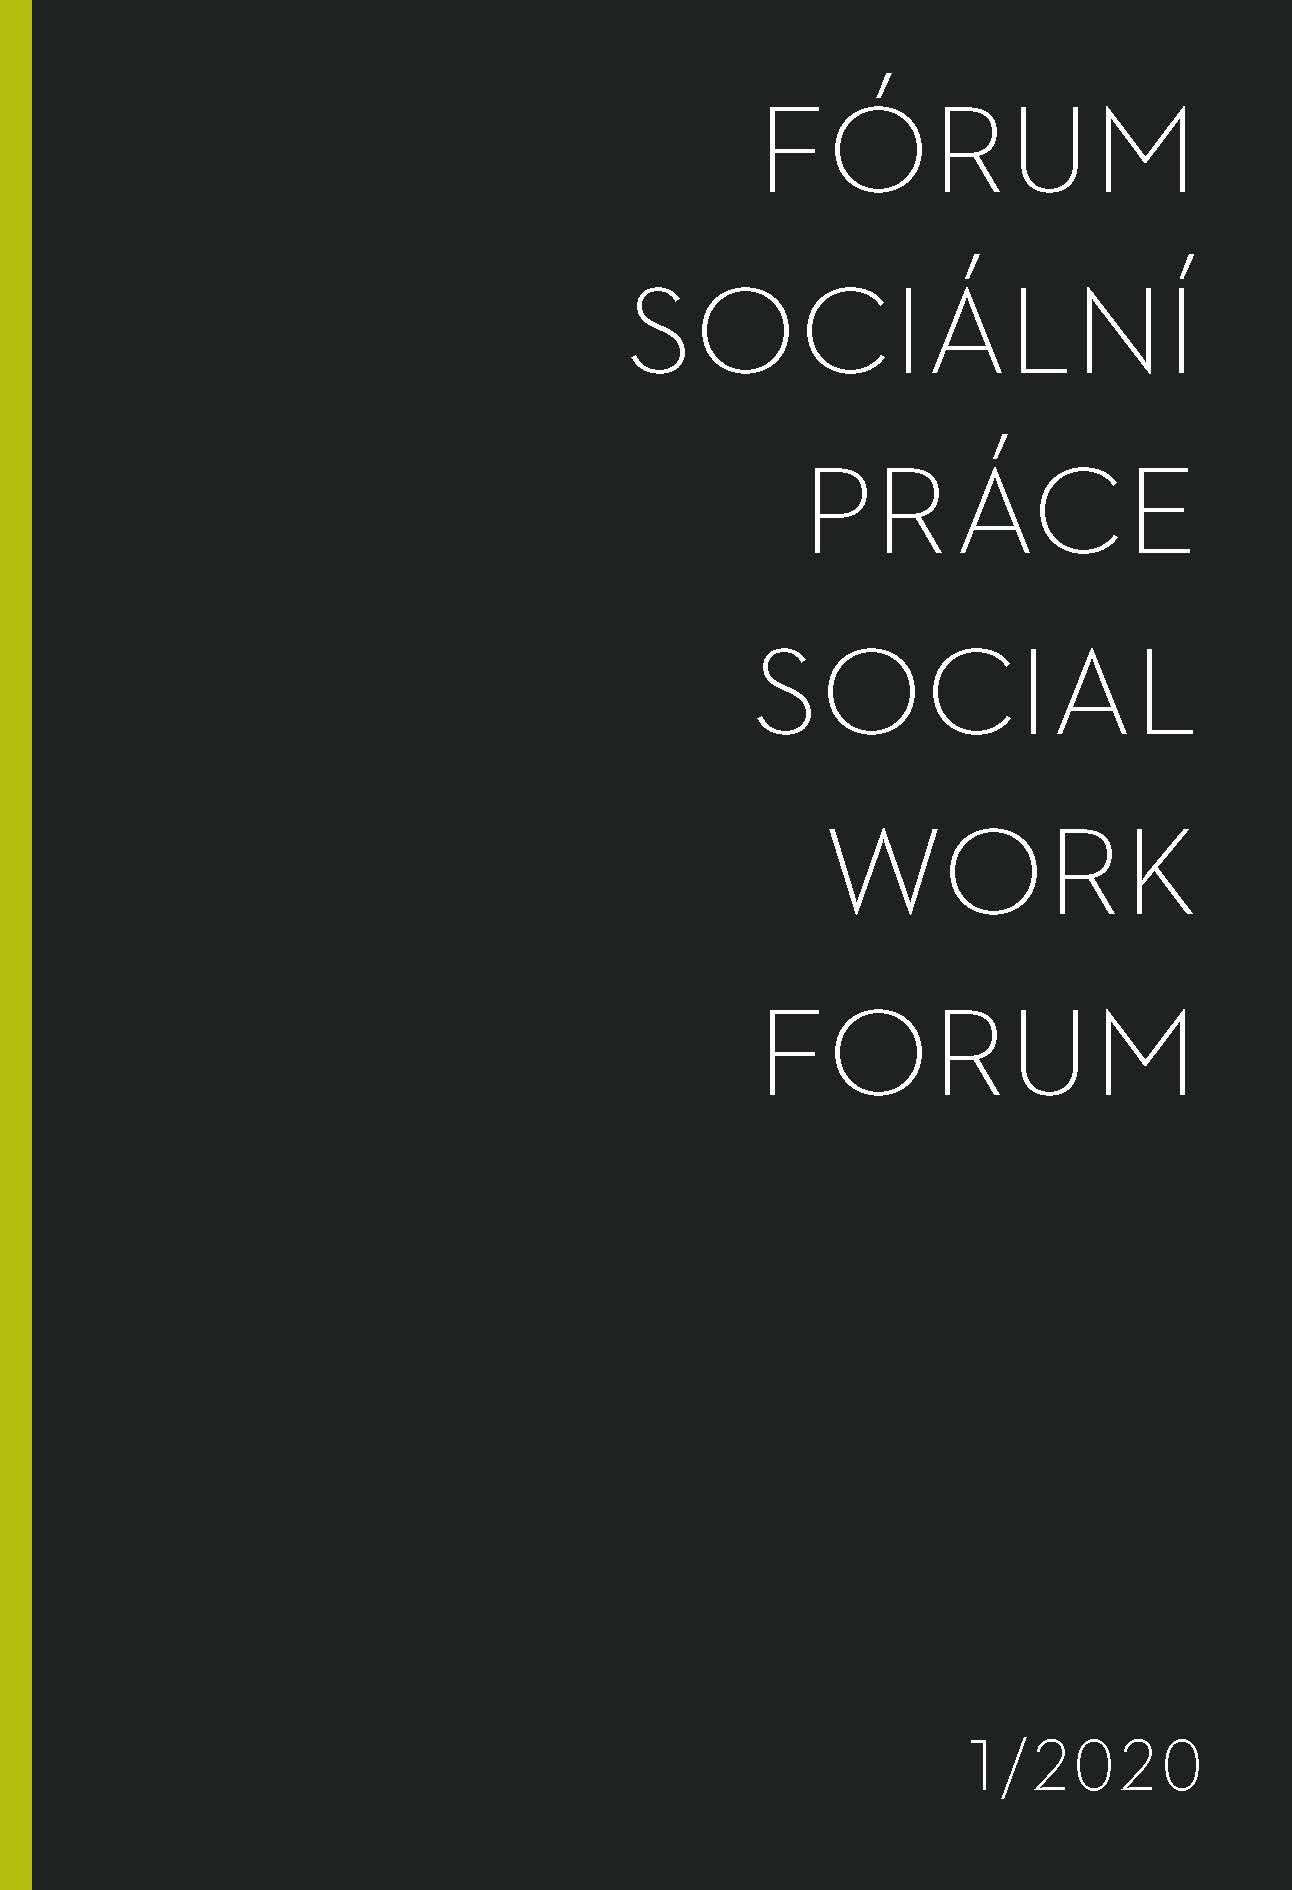 Job descriptions in social work - preliminary evaluation Cover Image